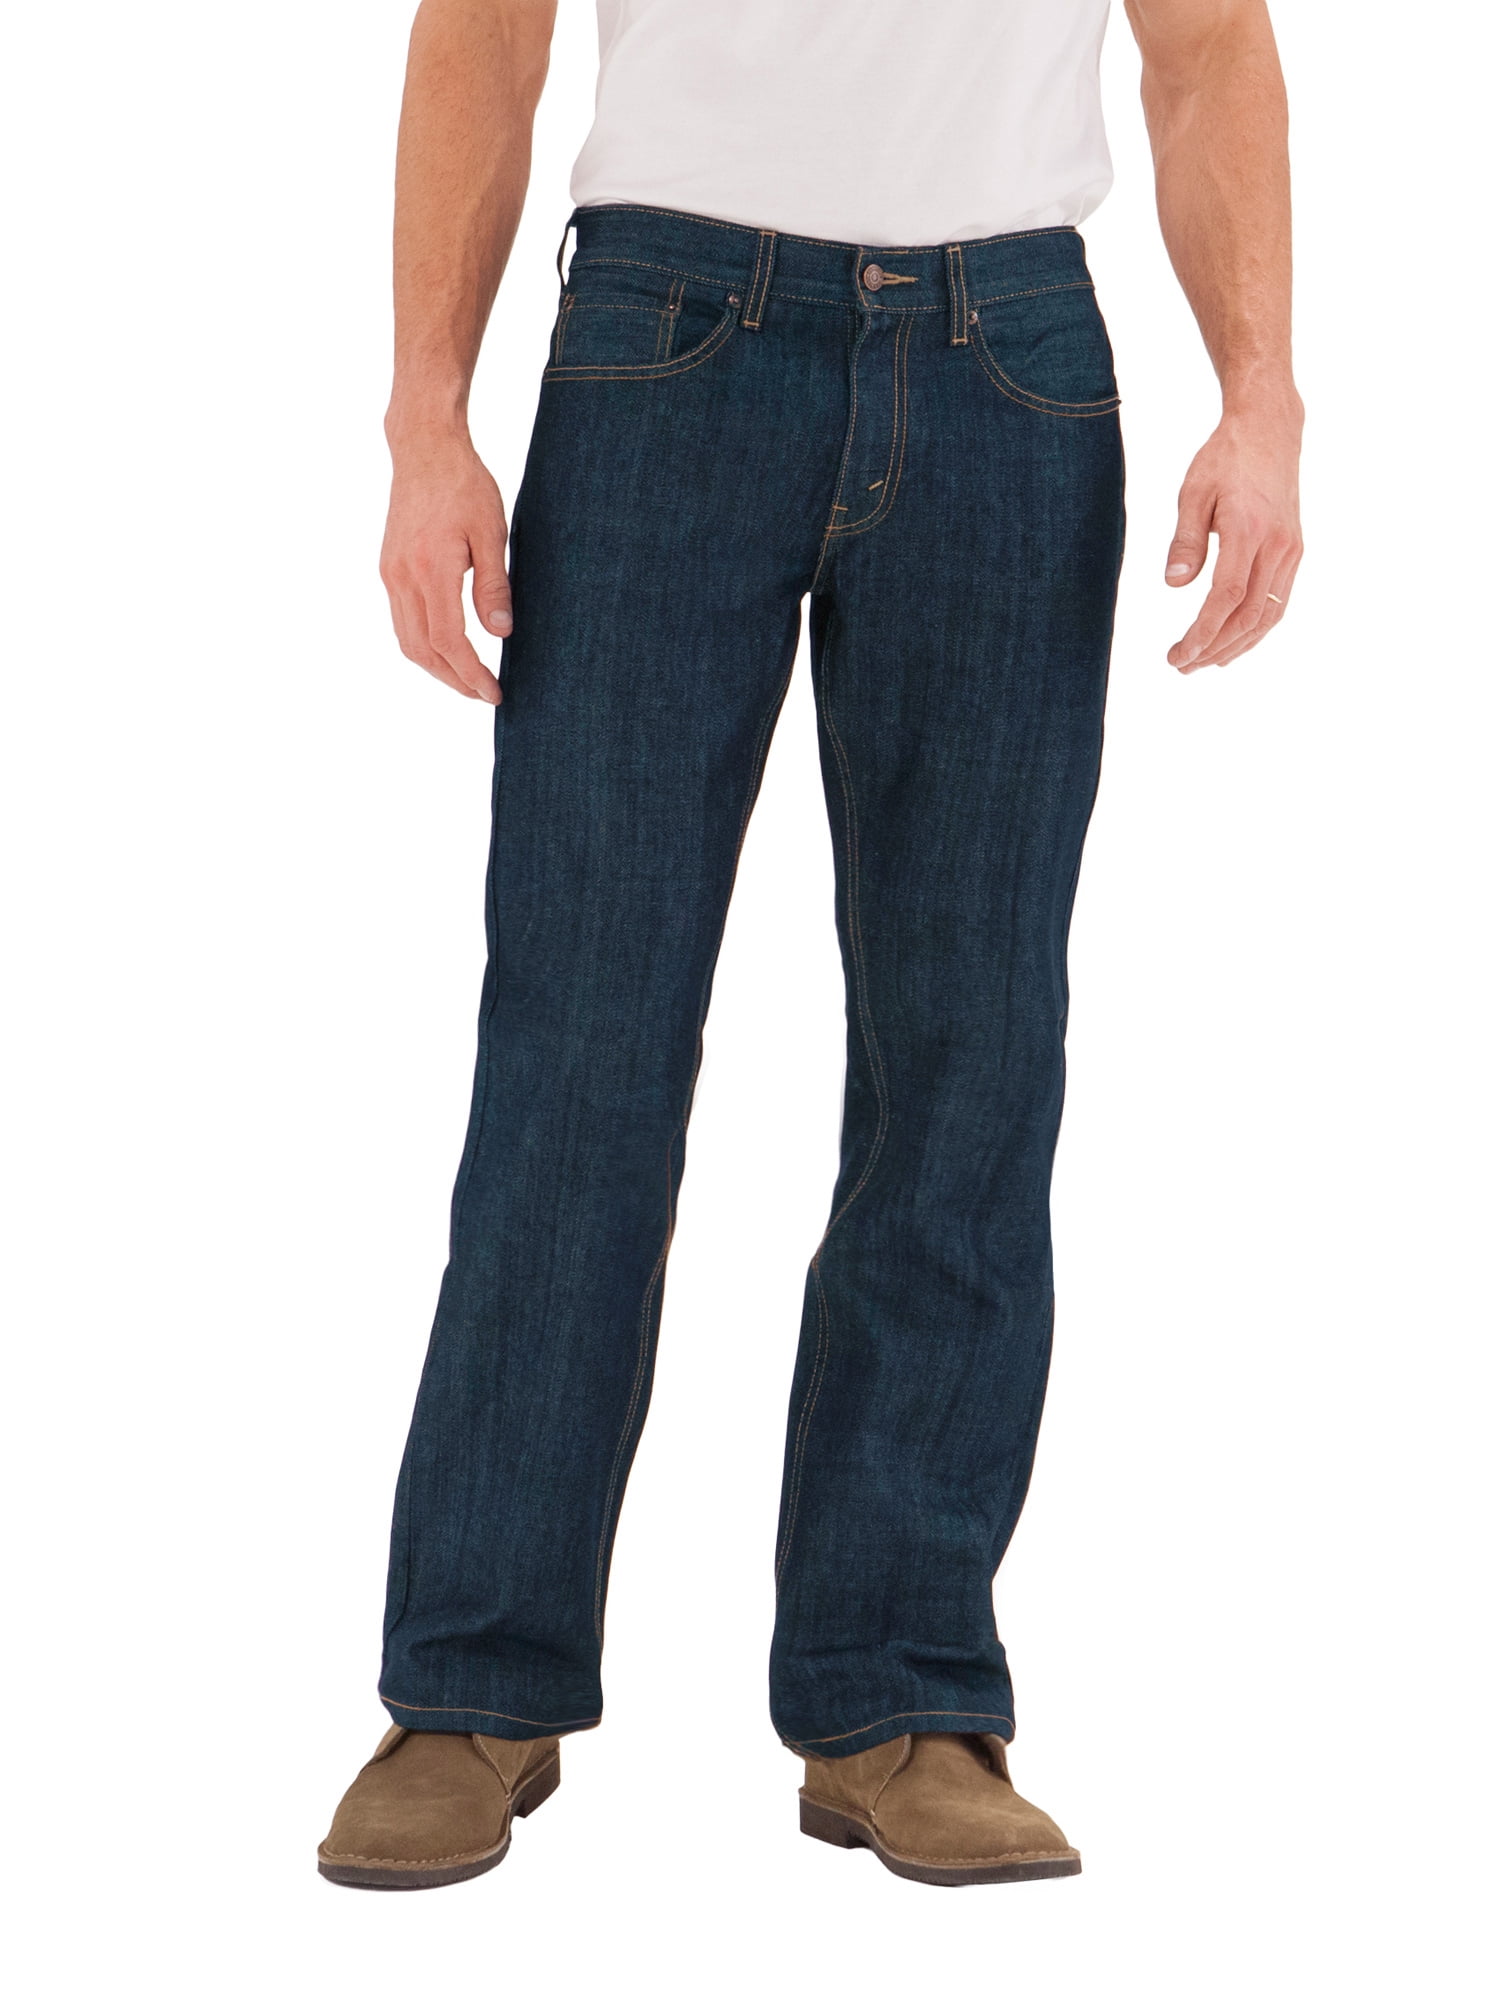 mens bootcut jeans walmart